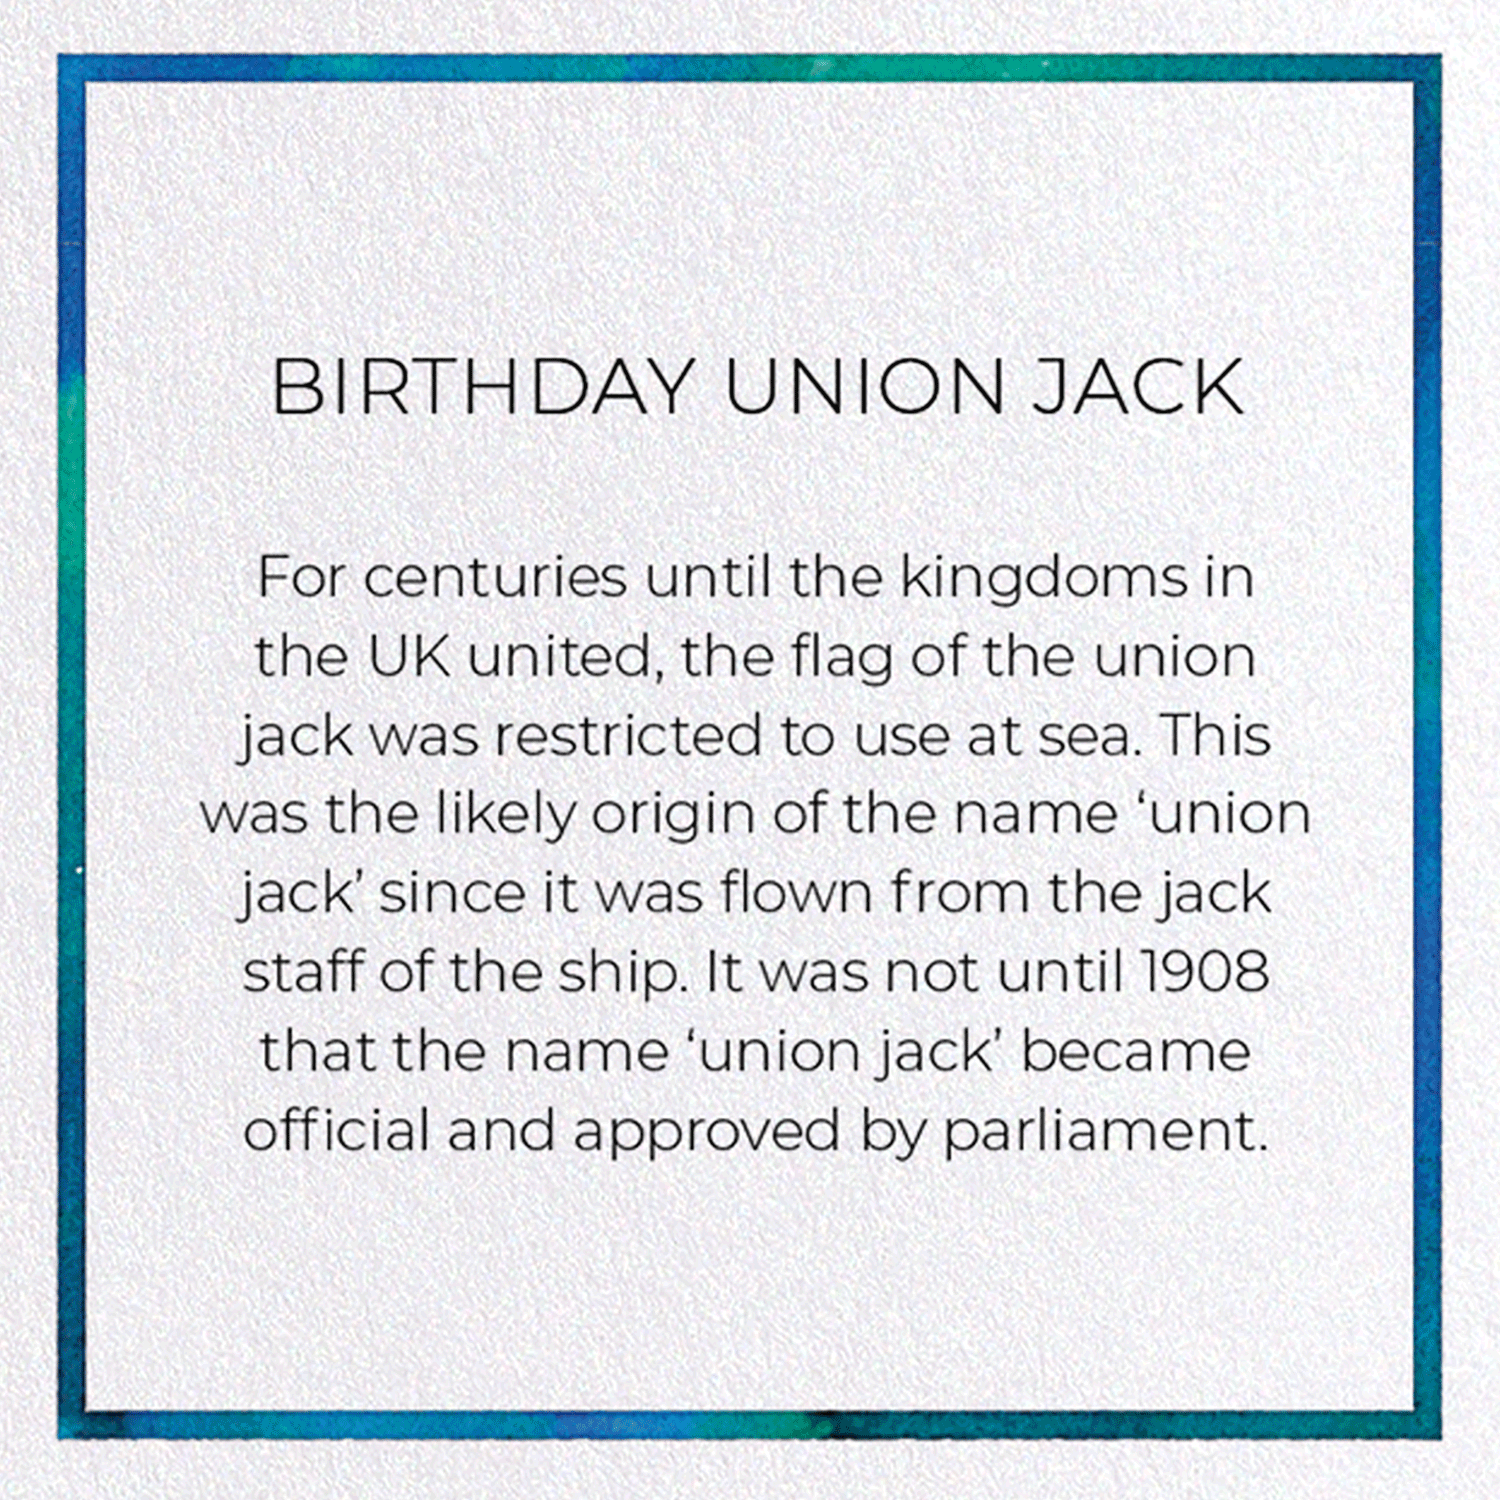 BIRTHDAY UNION JACK